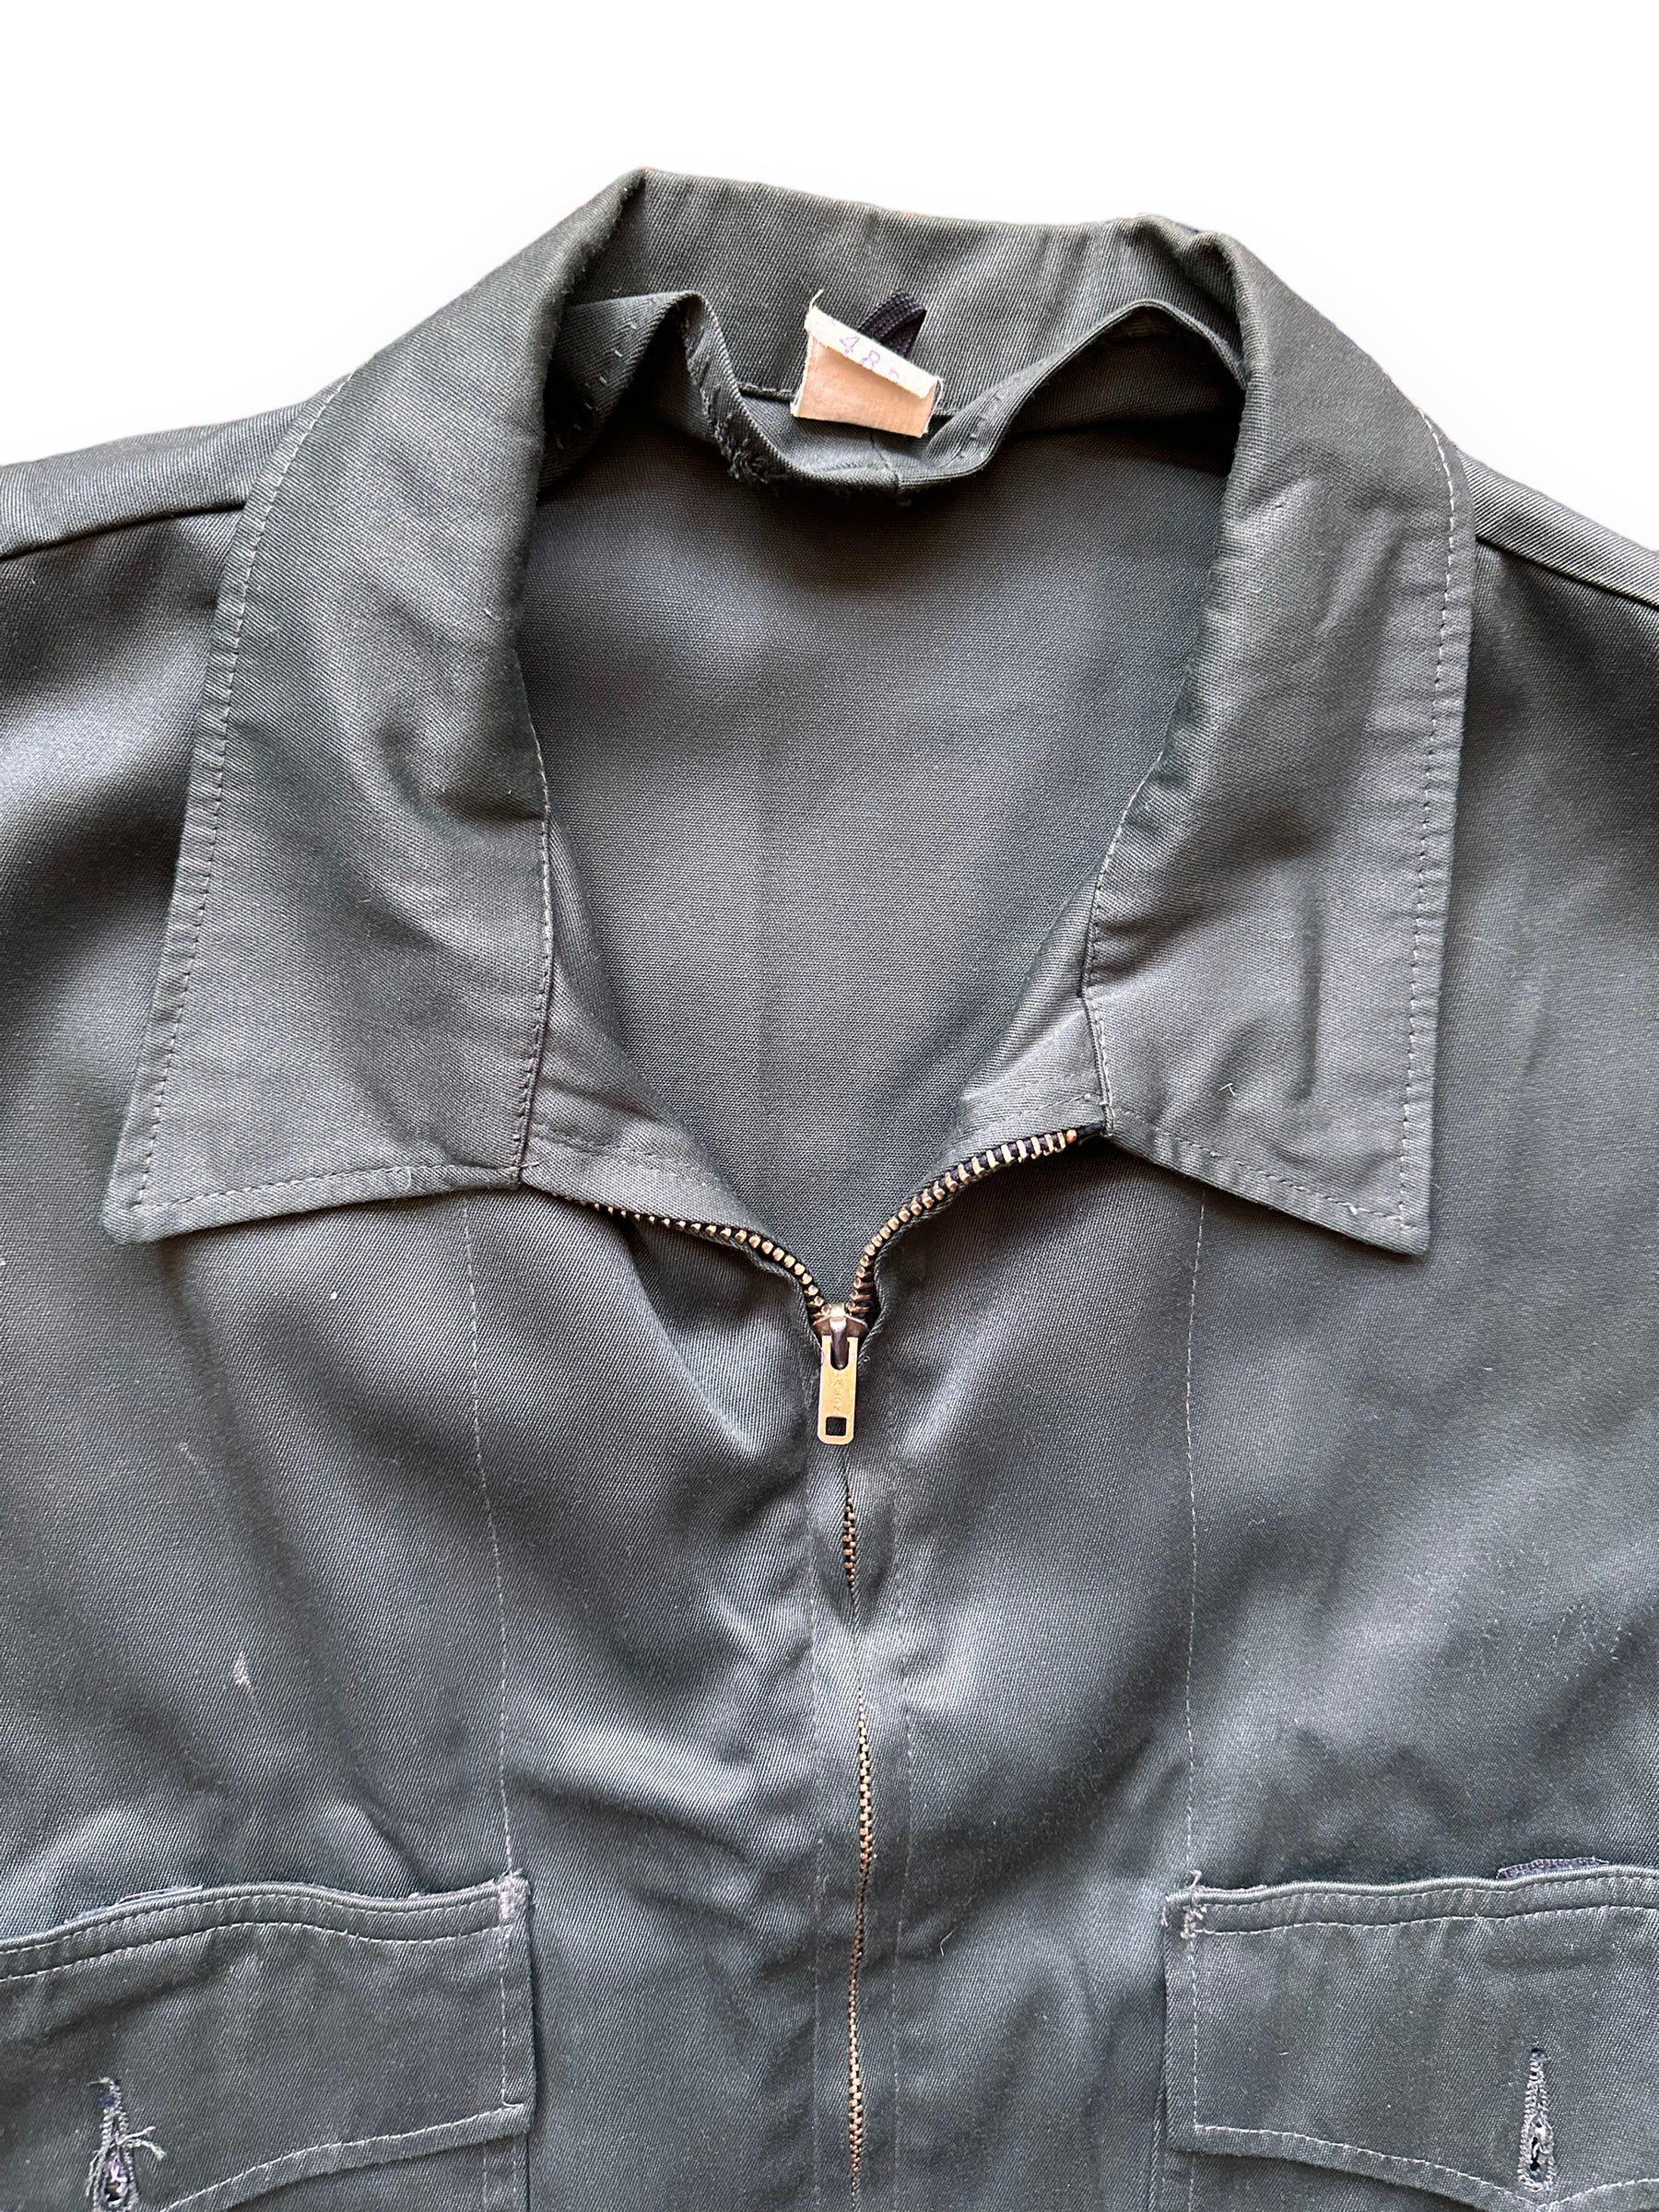 Tag View on Vintage Mr 2-Ply Slate Green Gas Station Jacket SZ 48 | Vintage Workwear Jacket Seattle | Seattle Vintage Clothing